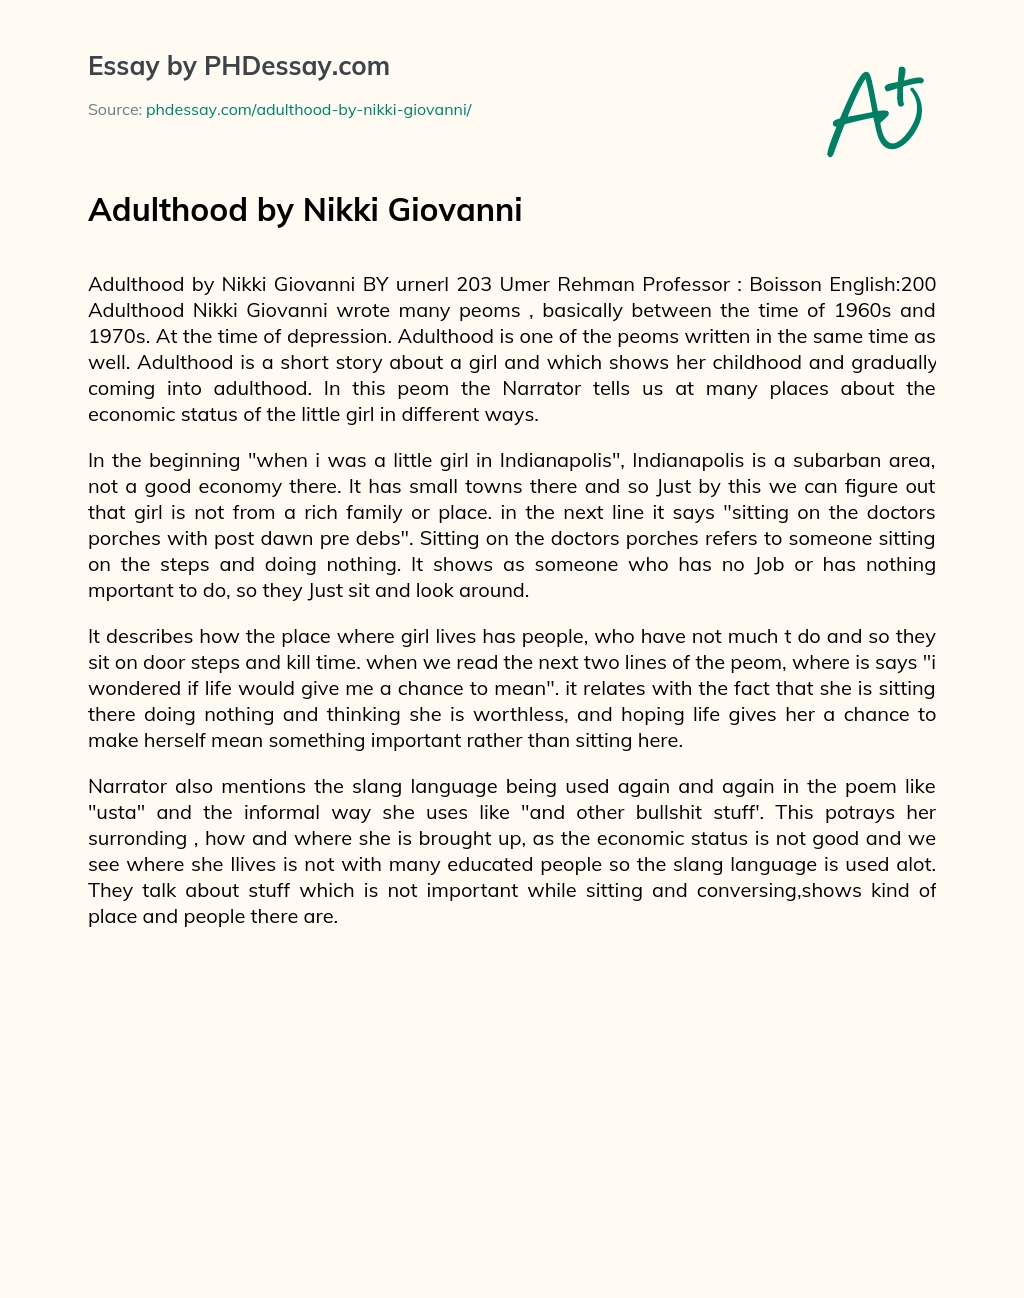 Adulthood by Nikki Giovanni essay